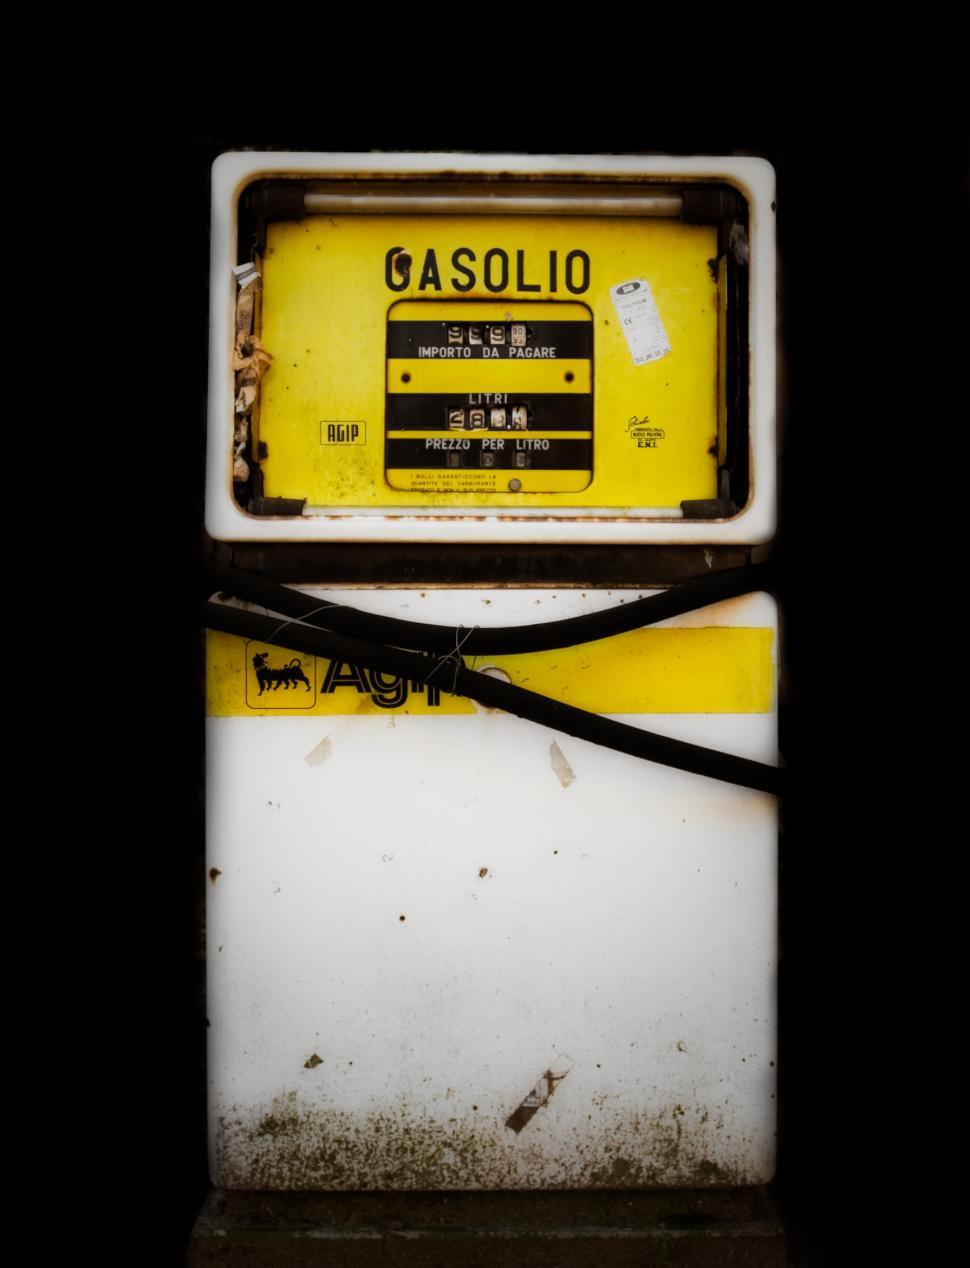 Download Free Stock Photo of Gasolio 